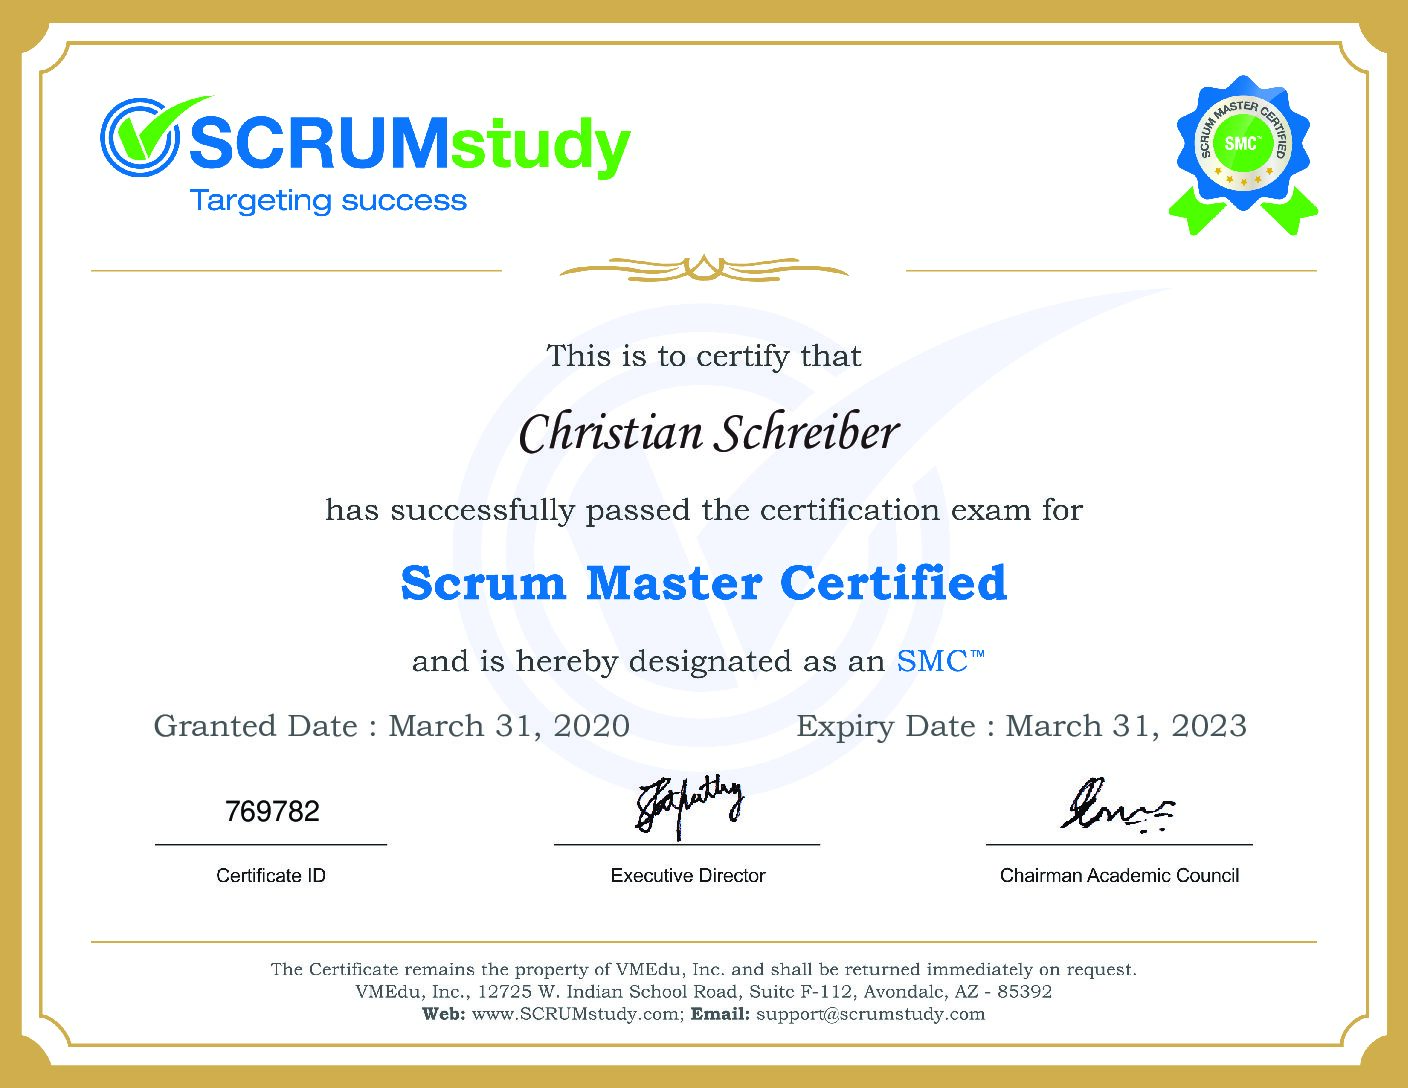 Scrum Master Certified - SMC